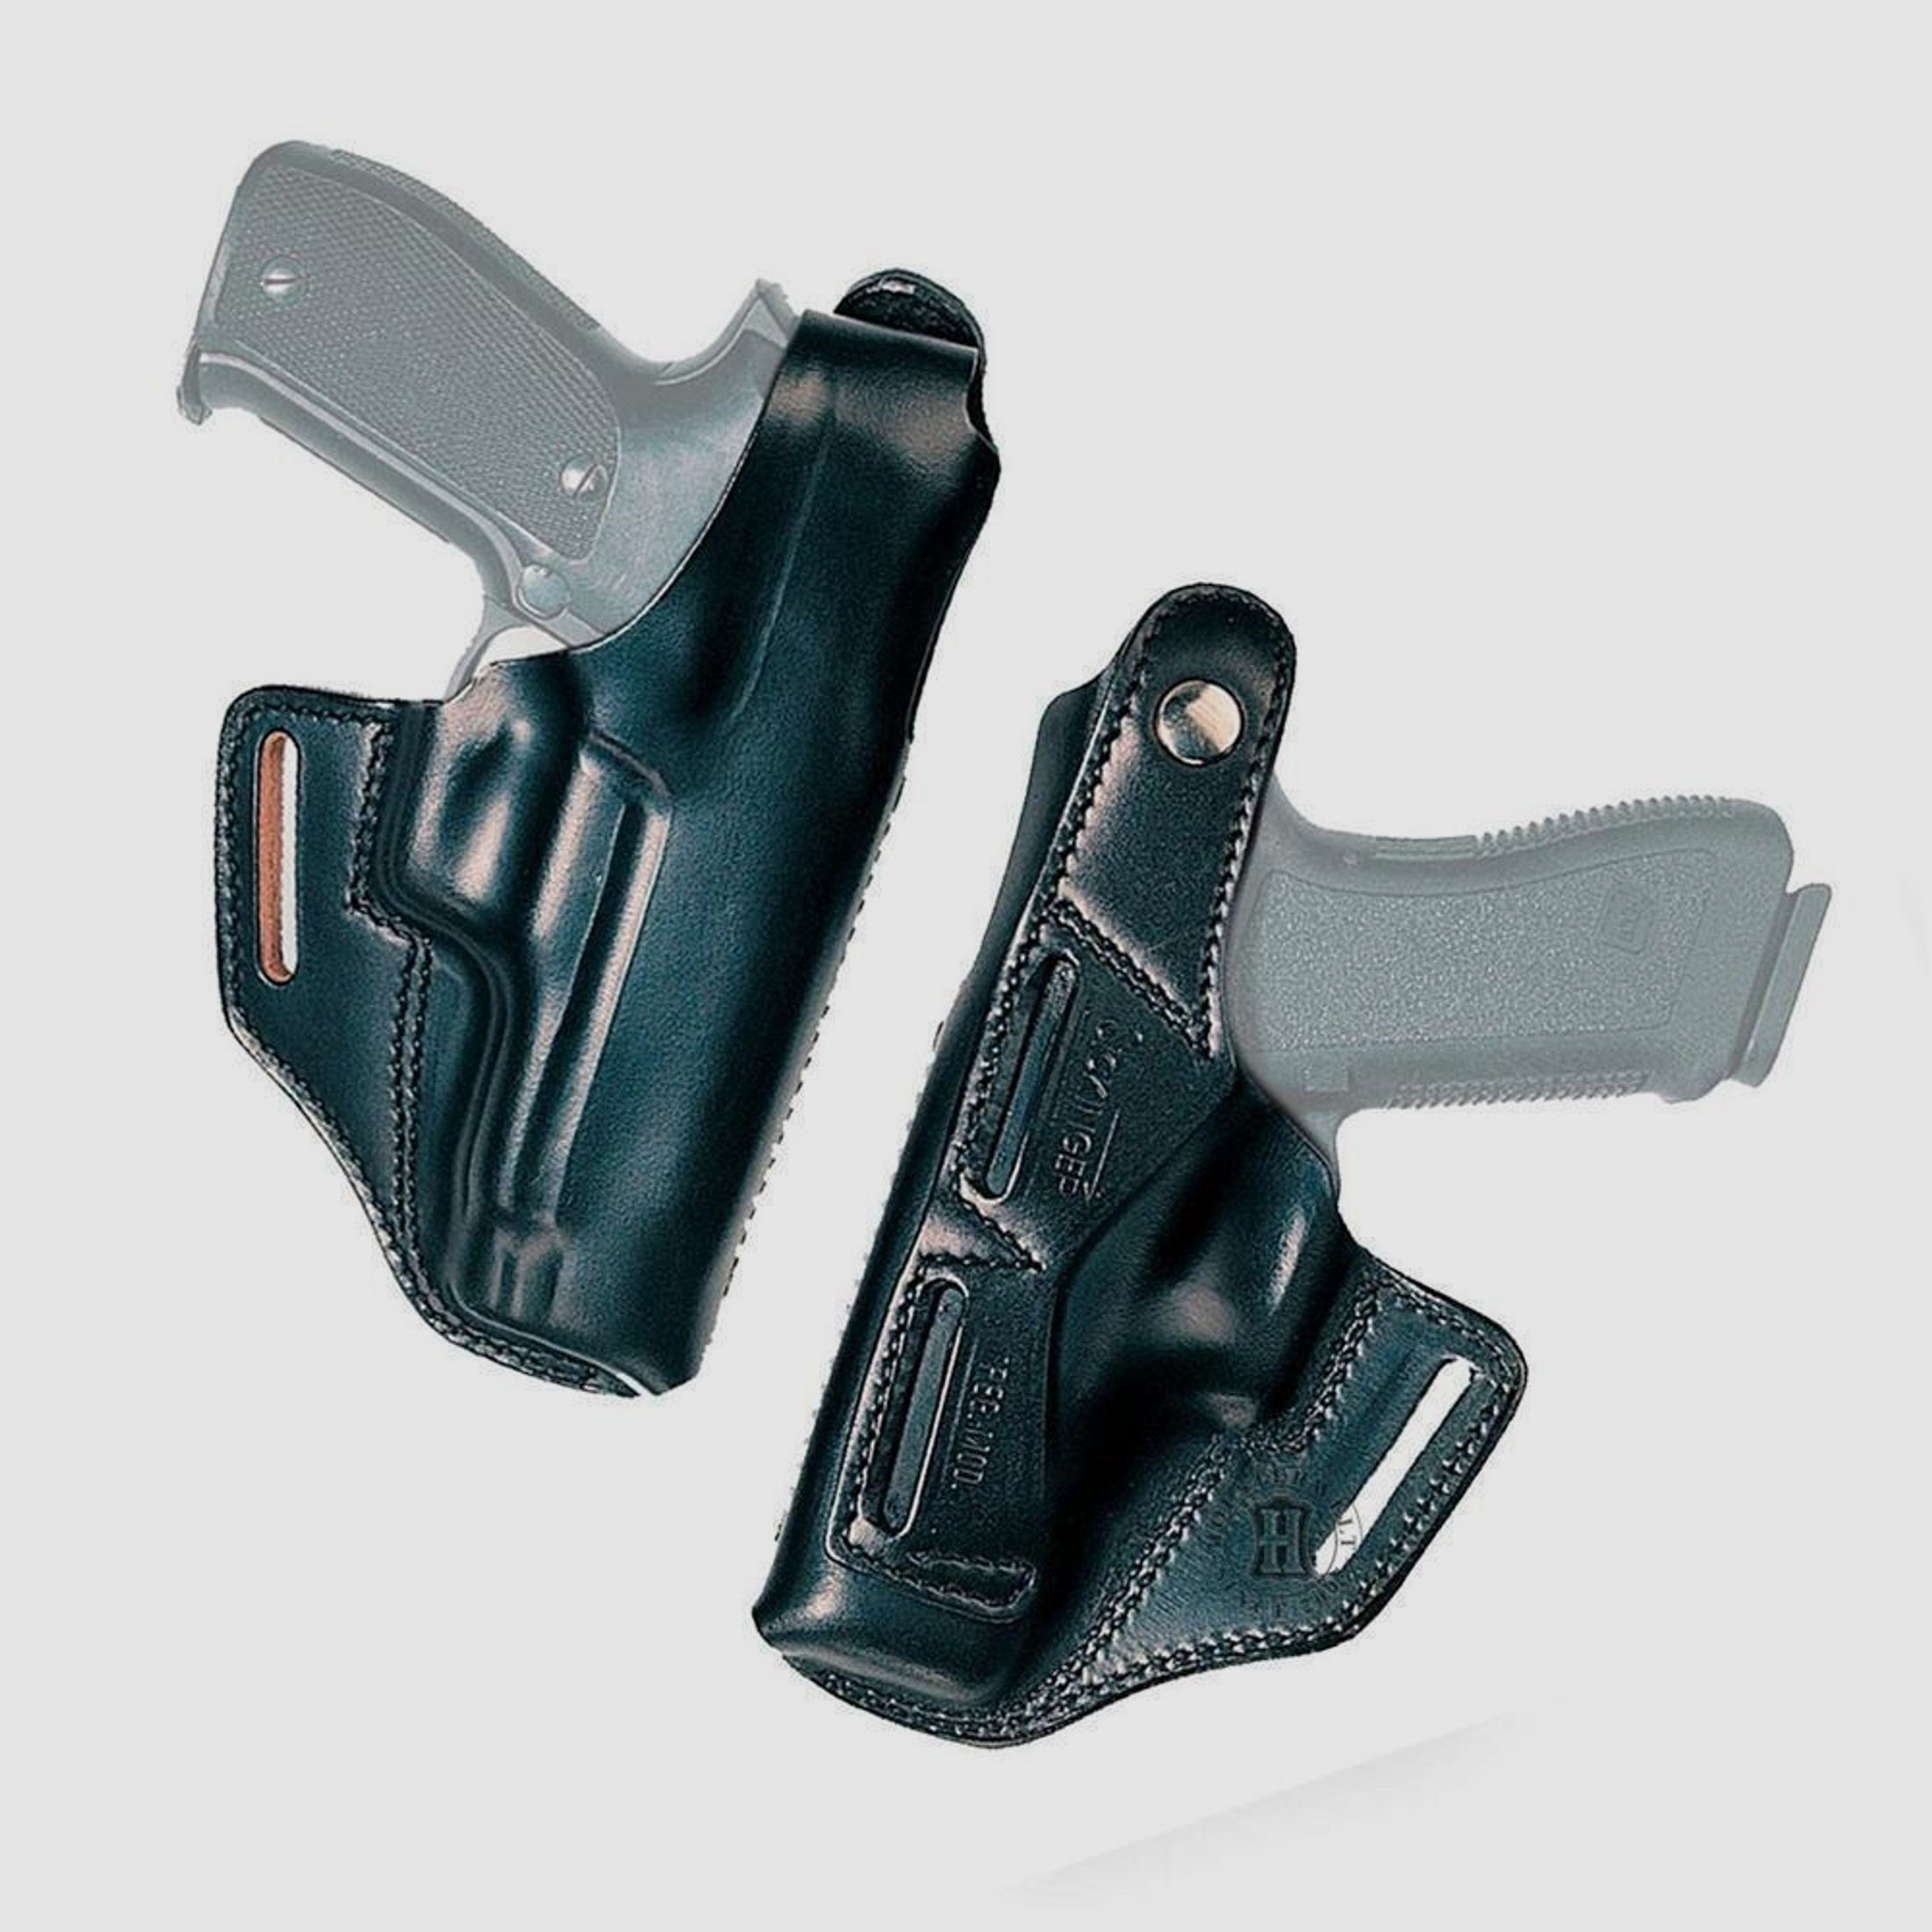 Gürtelholster BELT MASTER Glock 20/21, S&W SIGMA/F, Zoraki 917-Rechtshänder-Braun